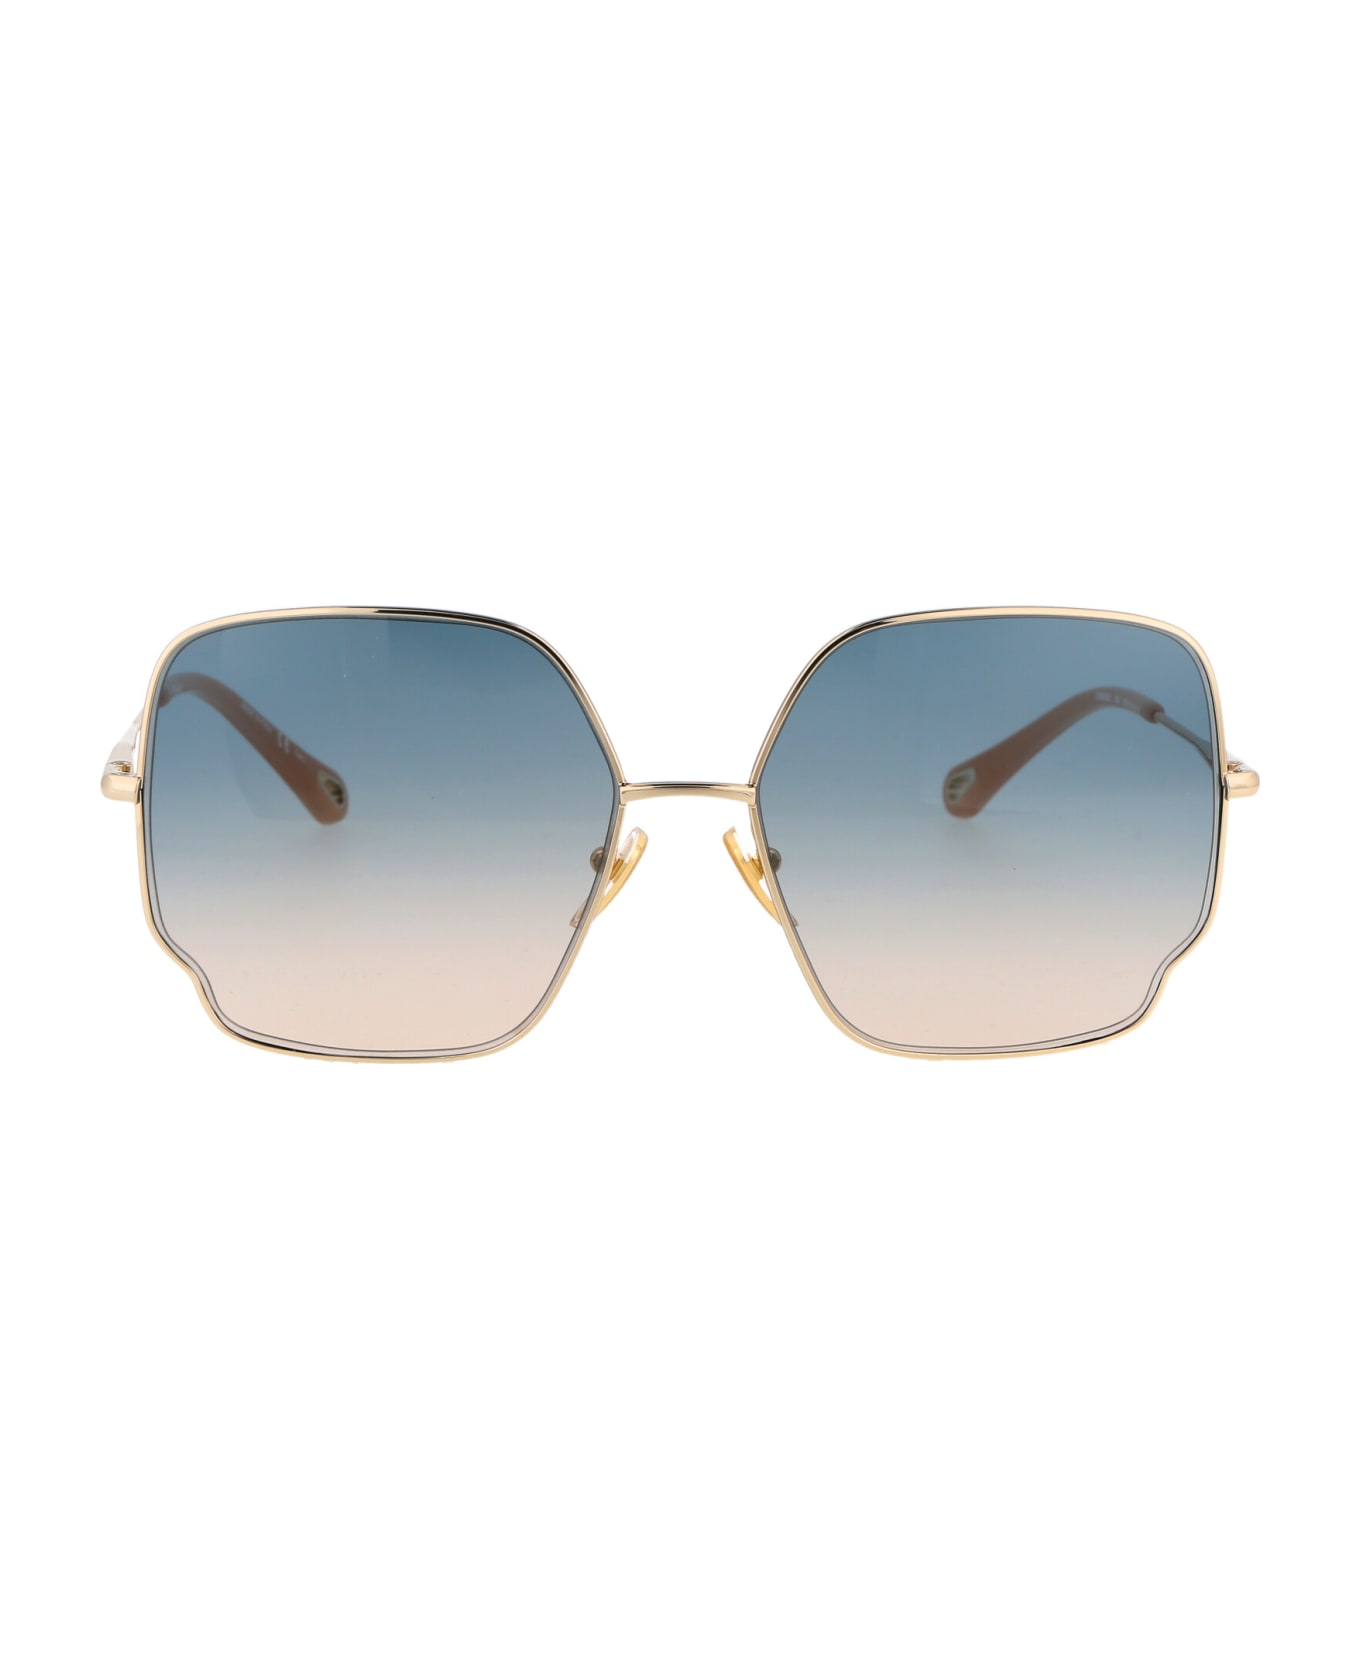 Chloé Eyewear Ch0092s Sunglasses - 003 GOLD GOLD GREEN